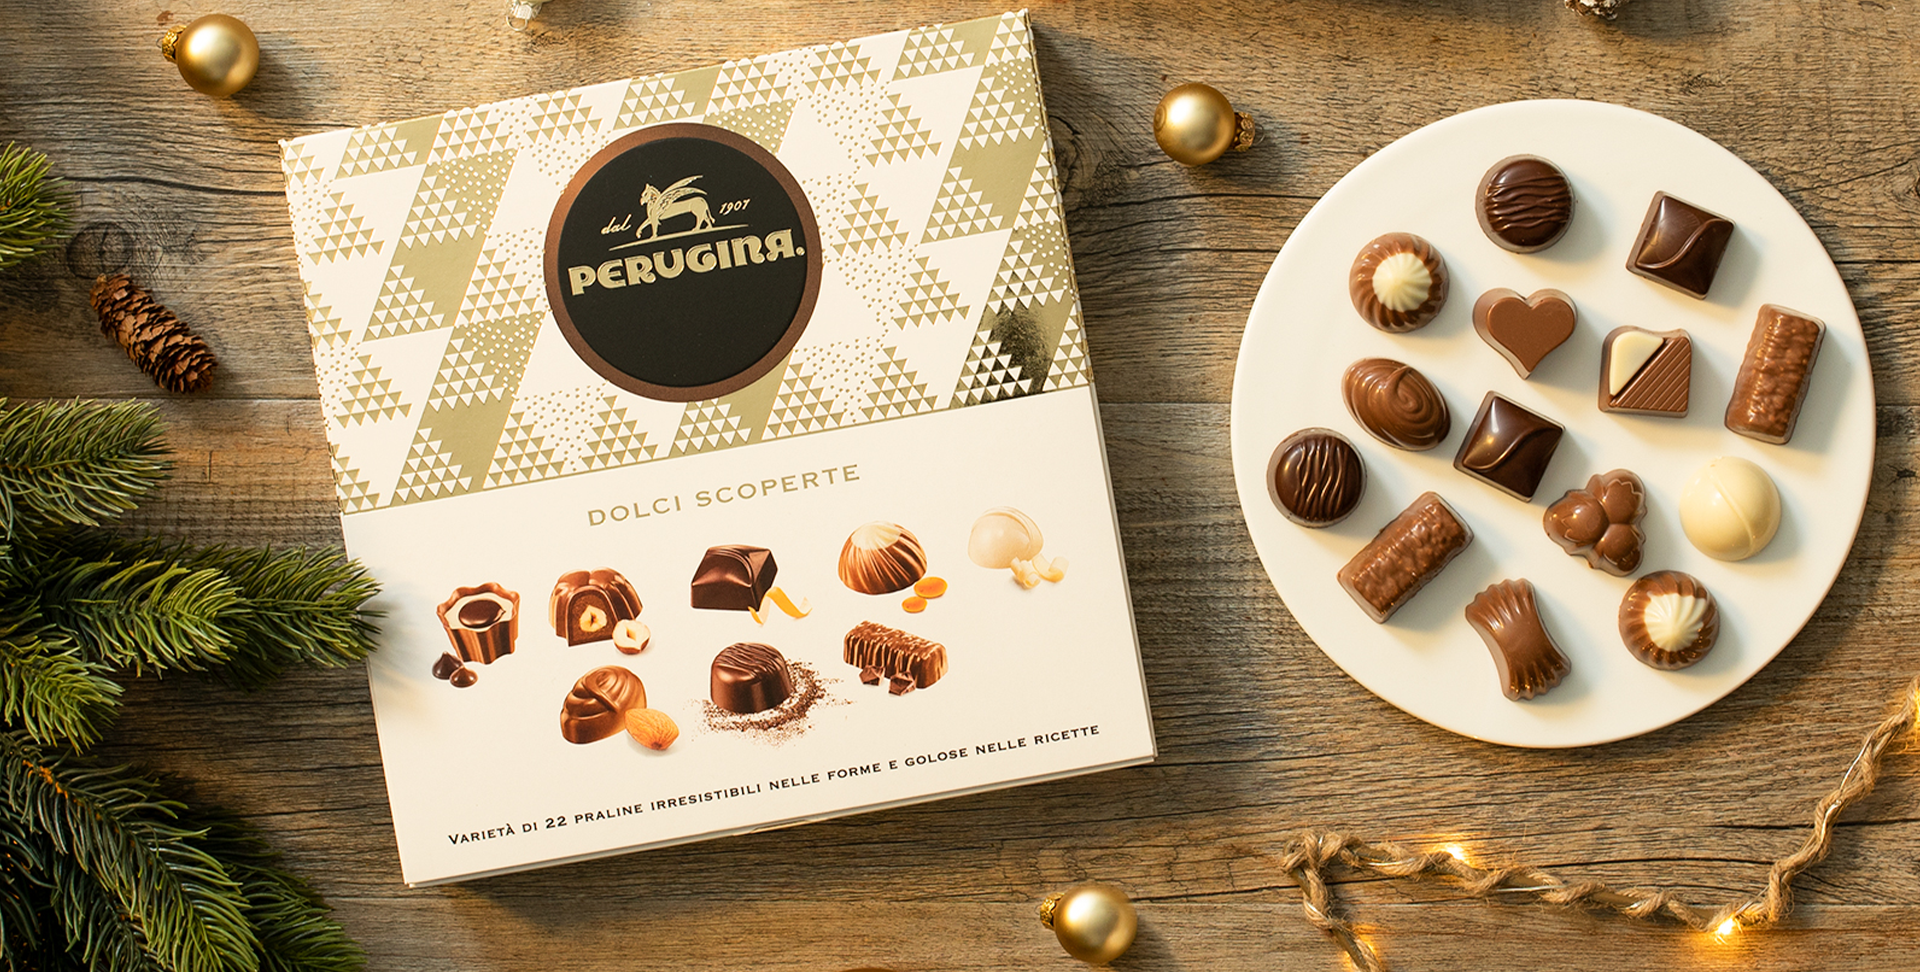 Perugina® dolci scoperte 200g scatola di cioccolatini